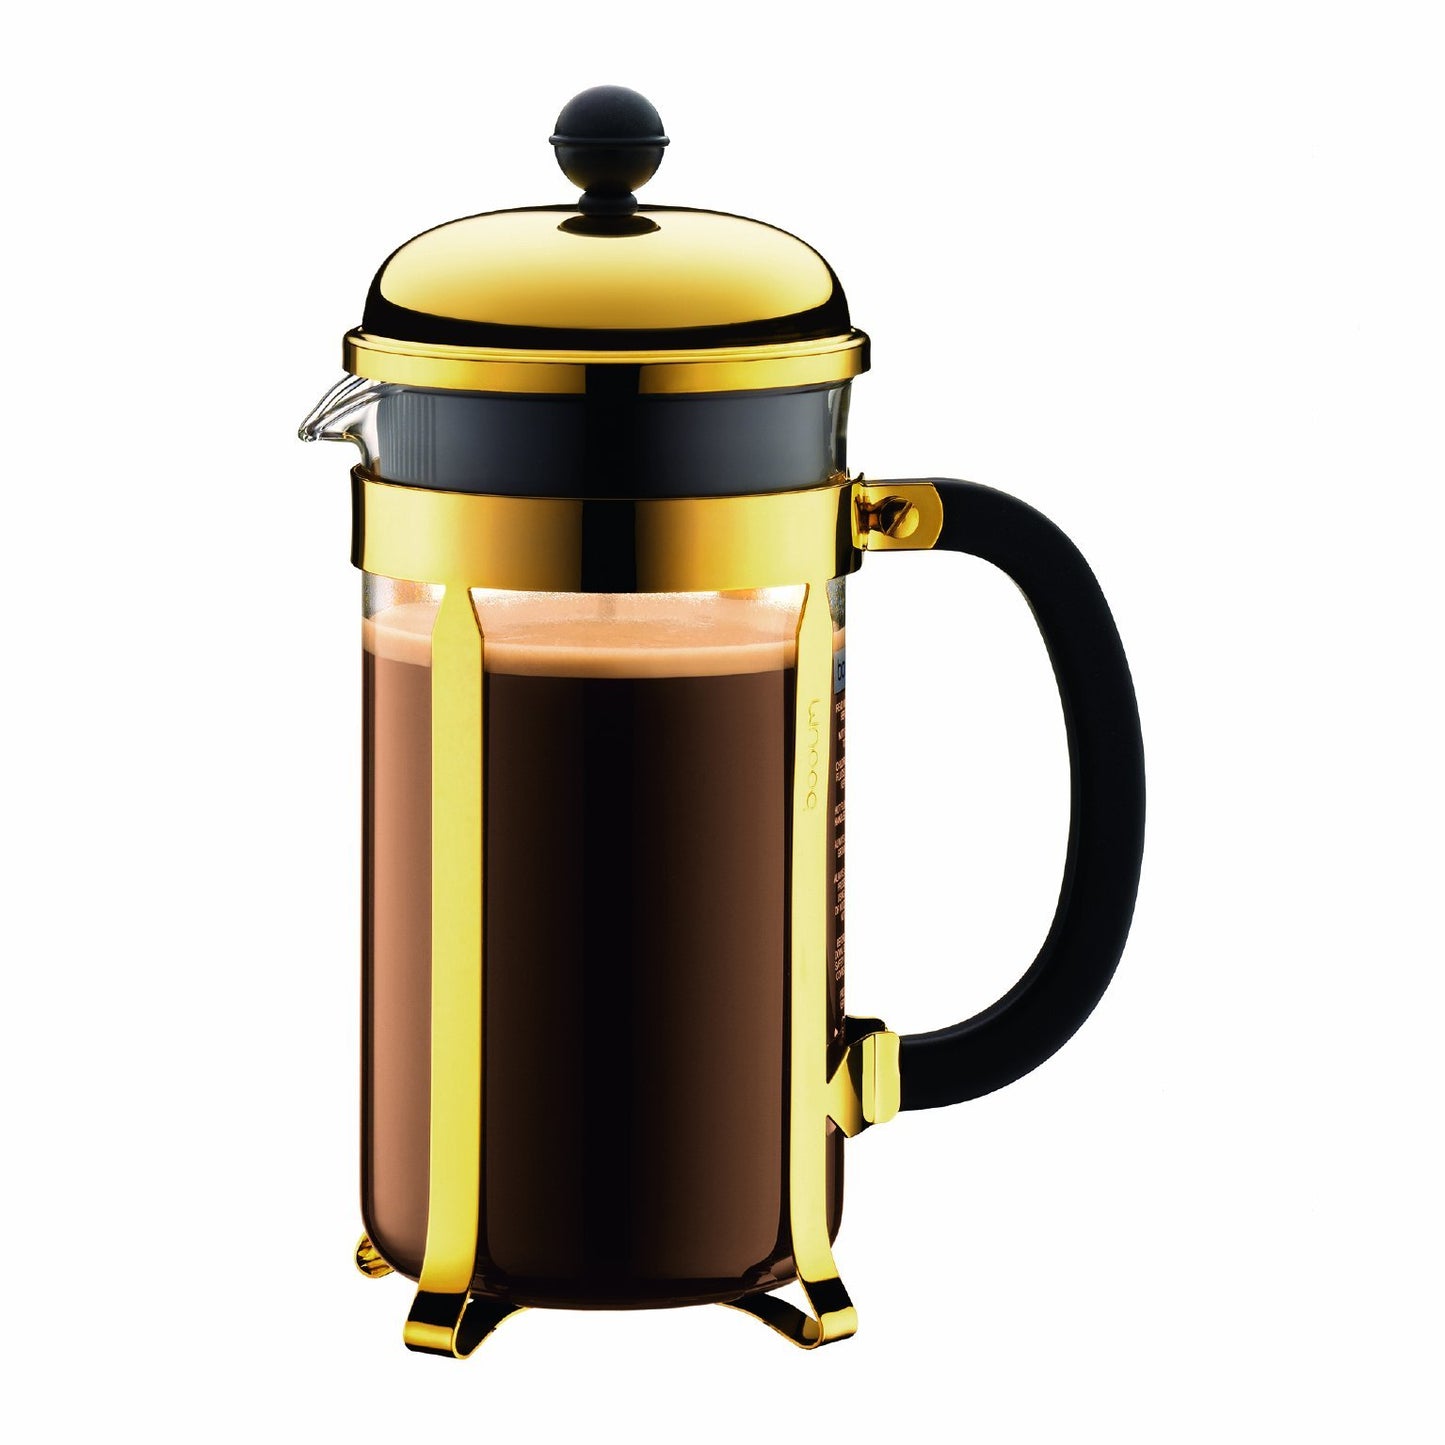 Bodum Chambord French Press Coffee Maker, 34 Ounce, Gold